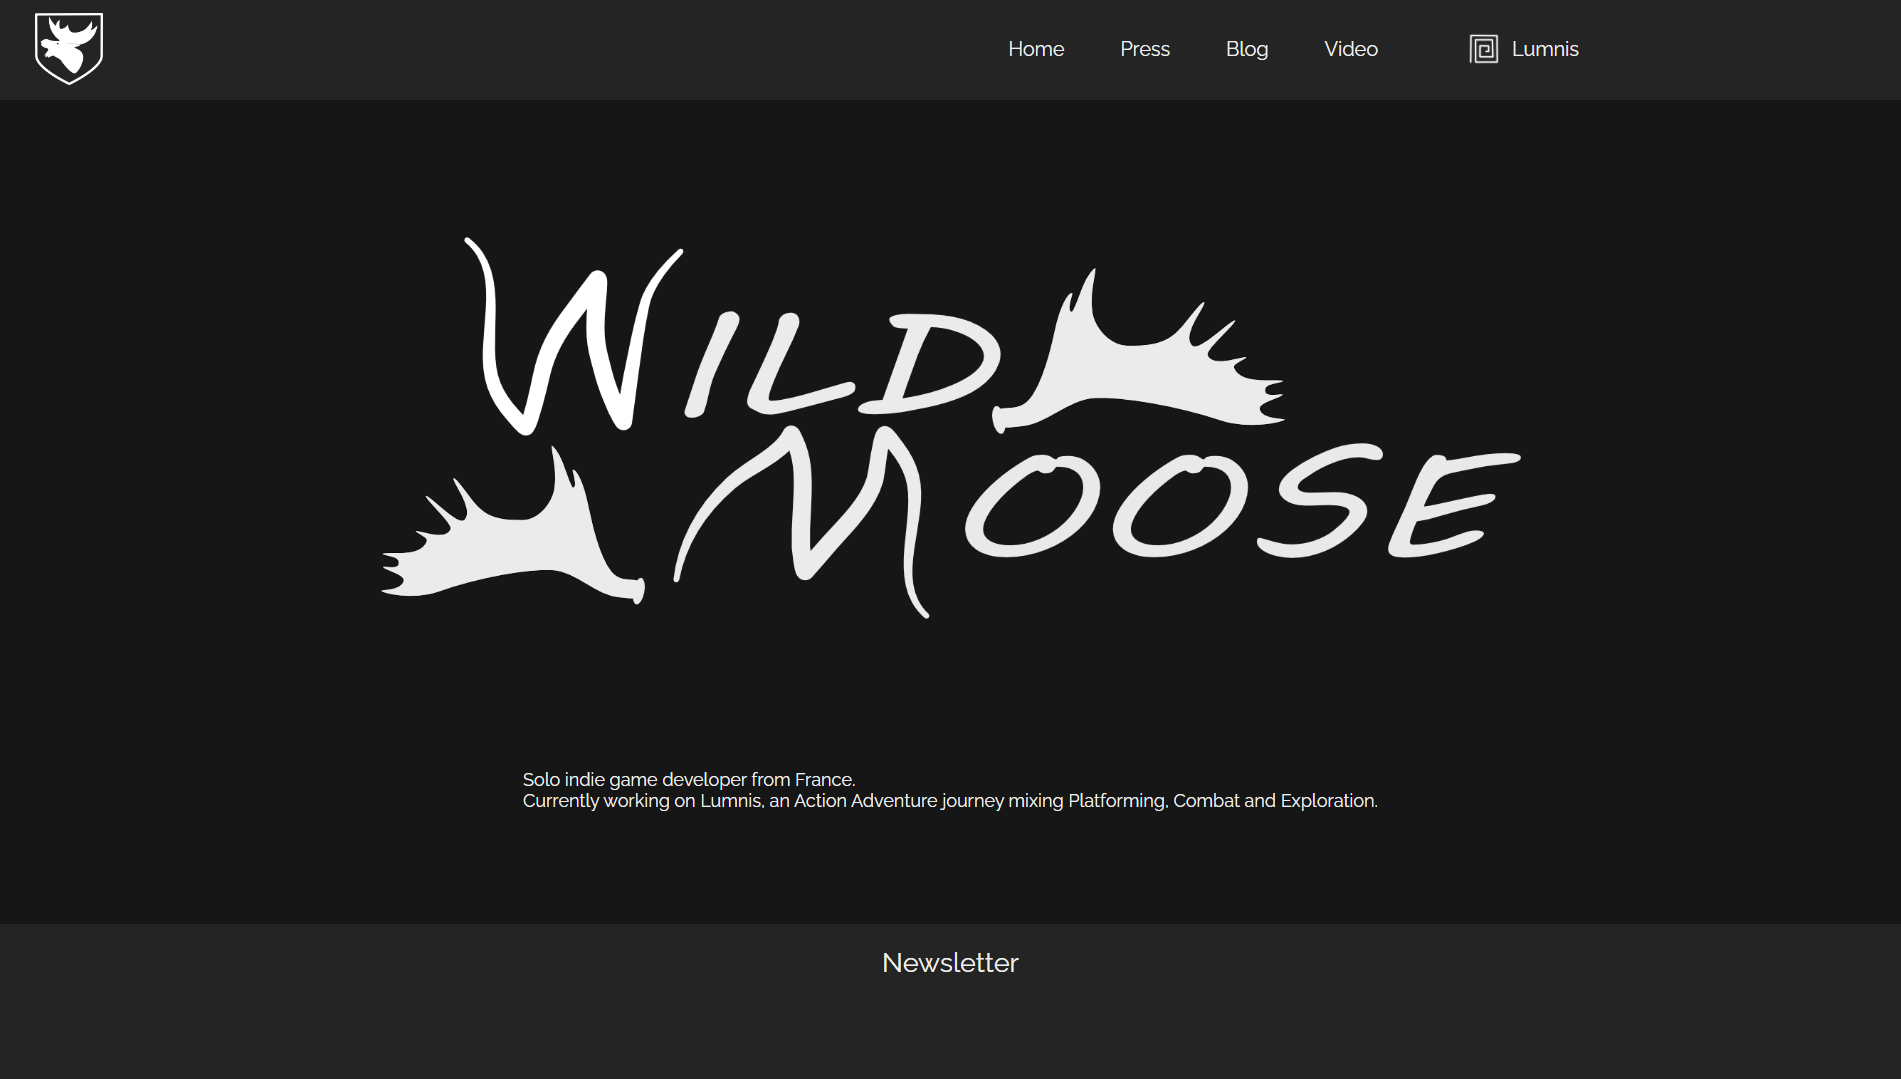 wild moose games website image